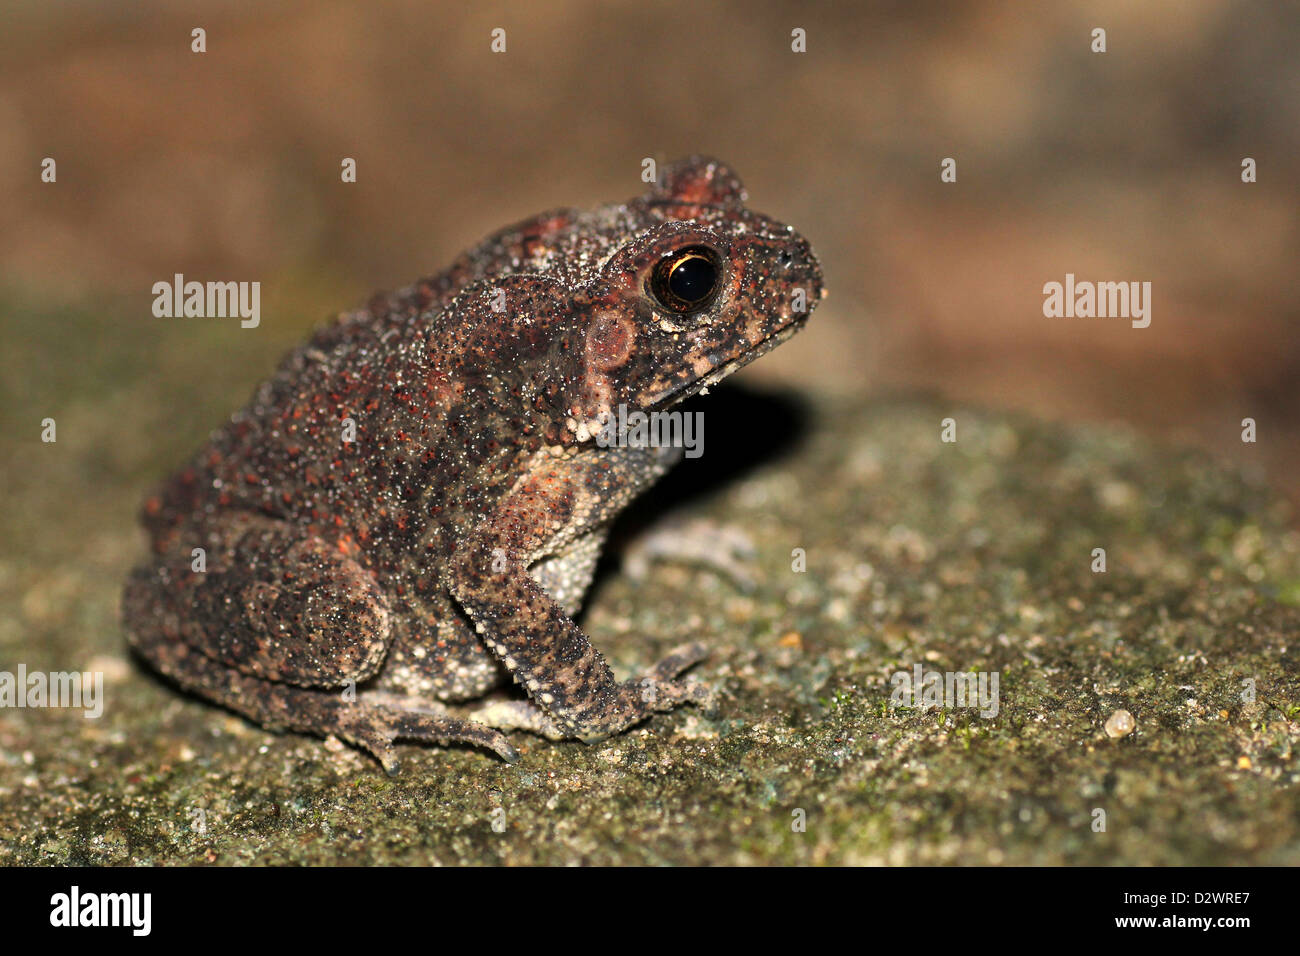 Yala Toad a.k.a. Atukorale’s Dwarf Toad - Bufo atukoralei Stock Photo